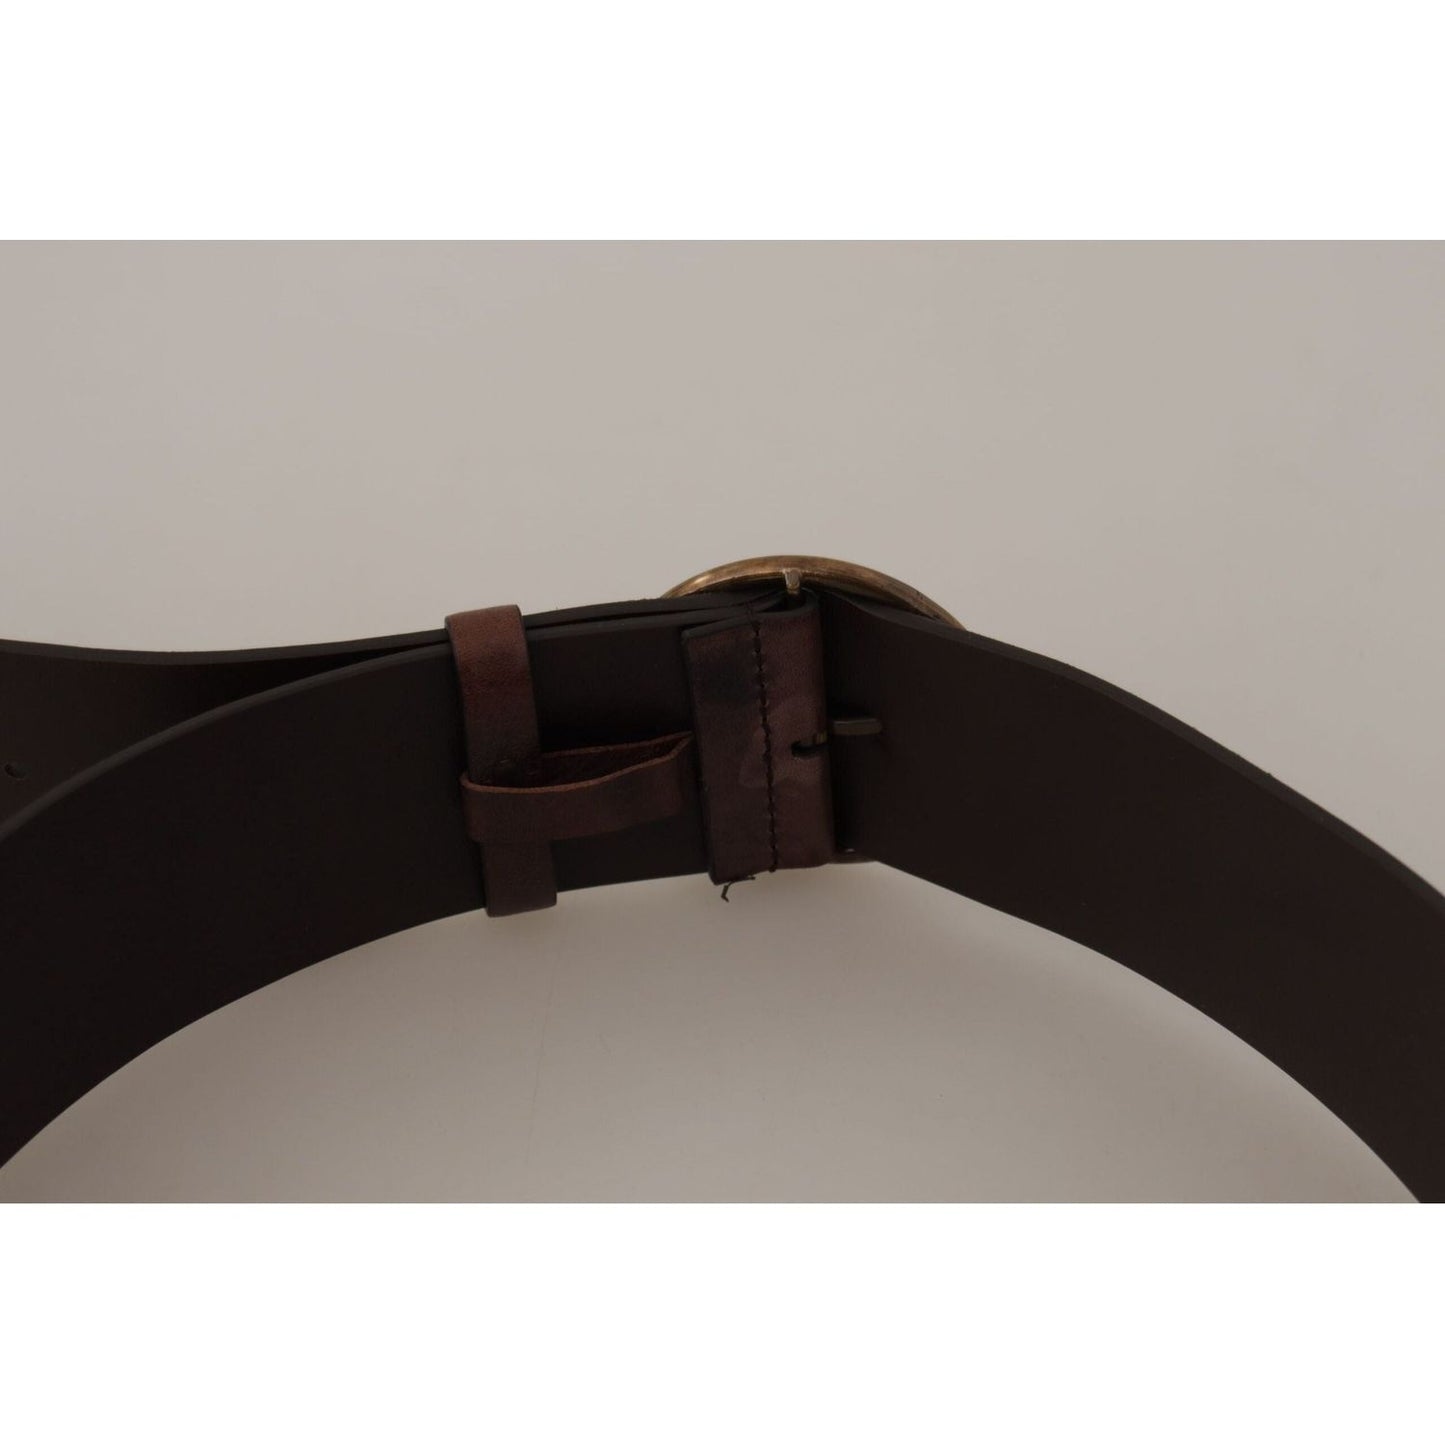 Dolce & Gabbana Elegant Dark Brown Leather Belt with Logo Buckle dark-brown-wide-calf-leather-logo-round-buckle-belt IMG_9753-1-scaled-4b37cbd5-827.jpg